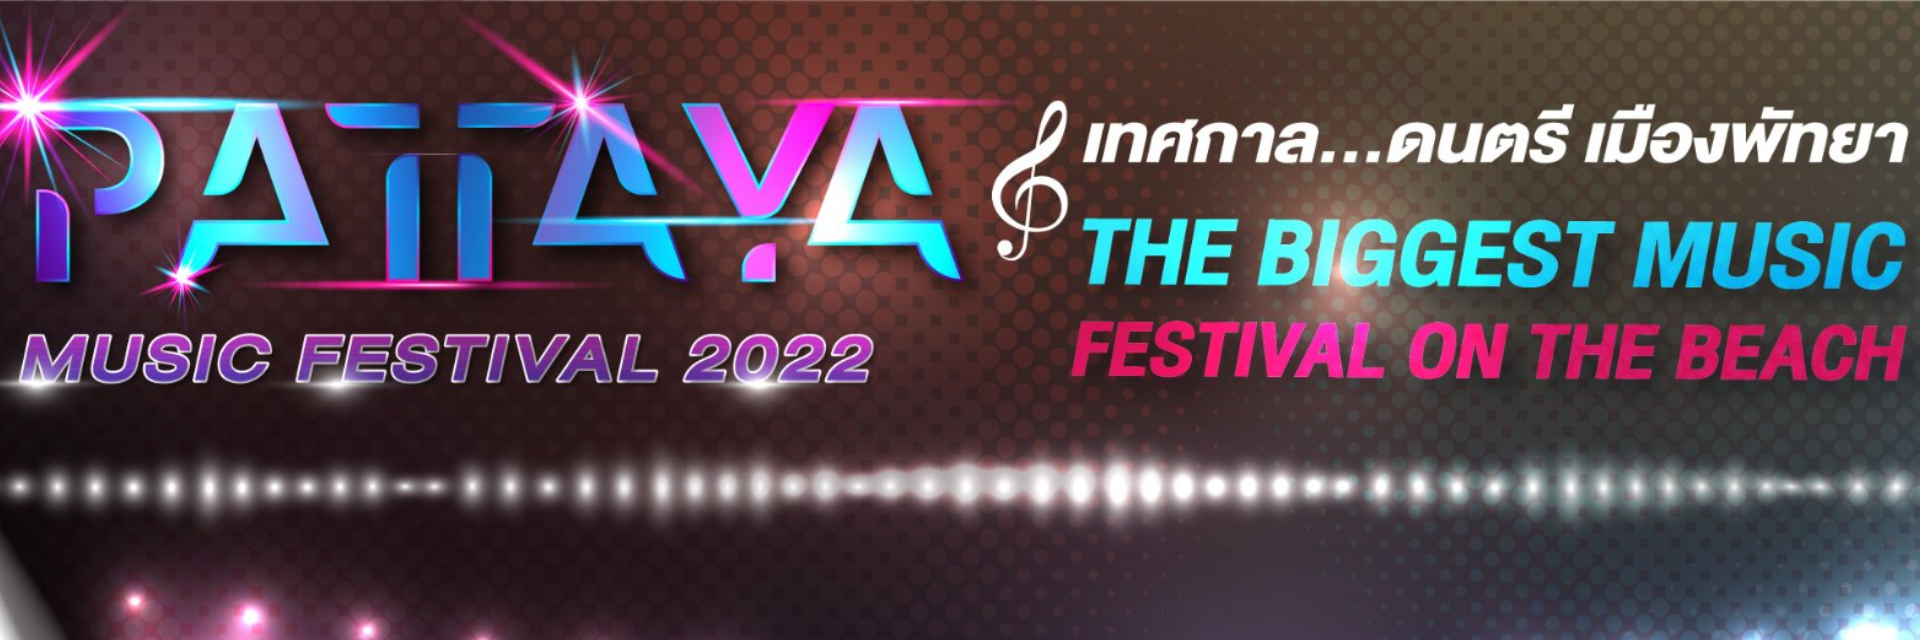 PATTAYA MUSIC FESTIVAL 2022